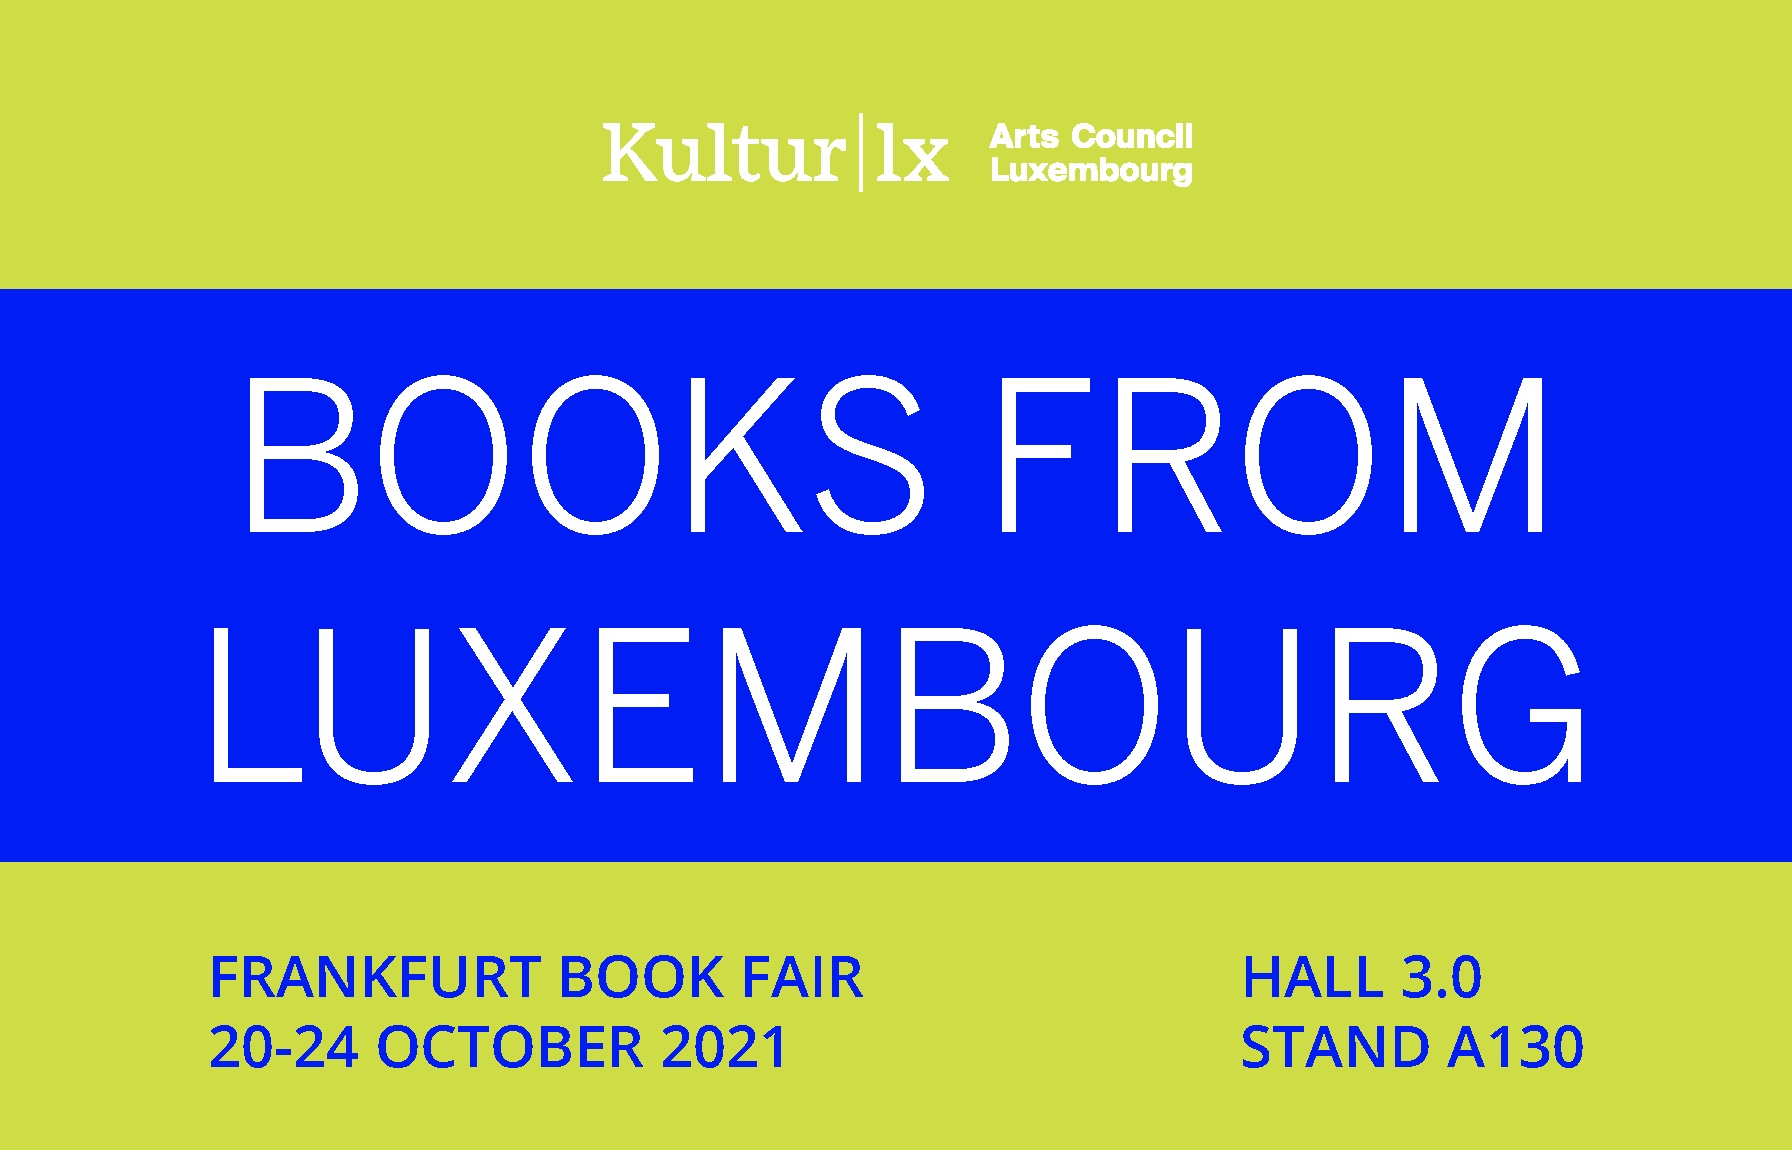 Books from Luxembourg - Frankfurter Book Fair